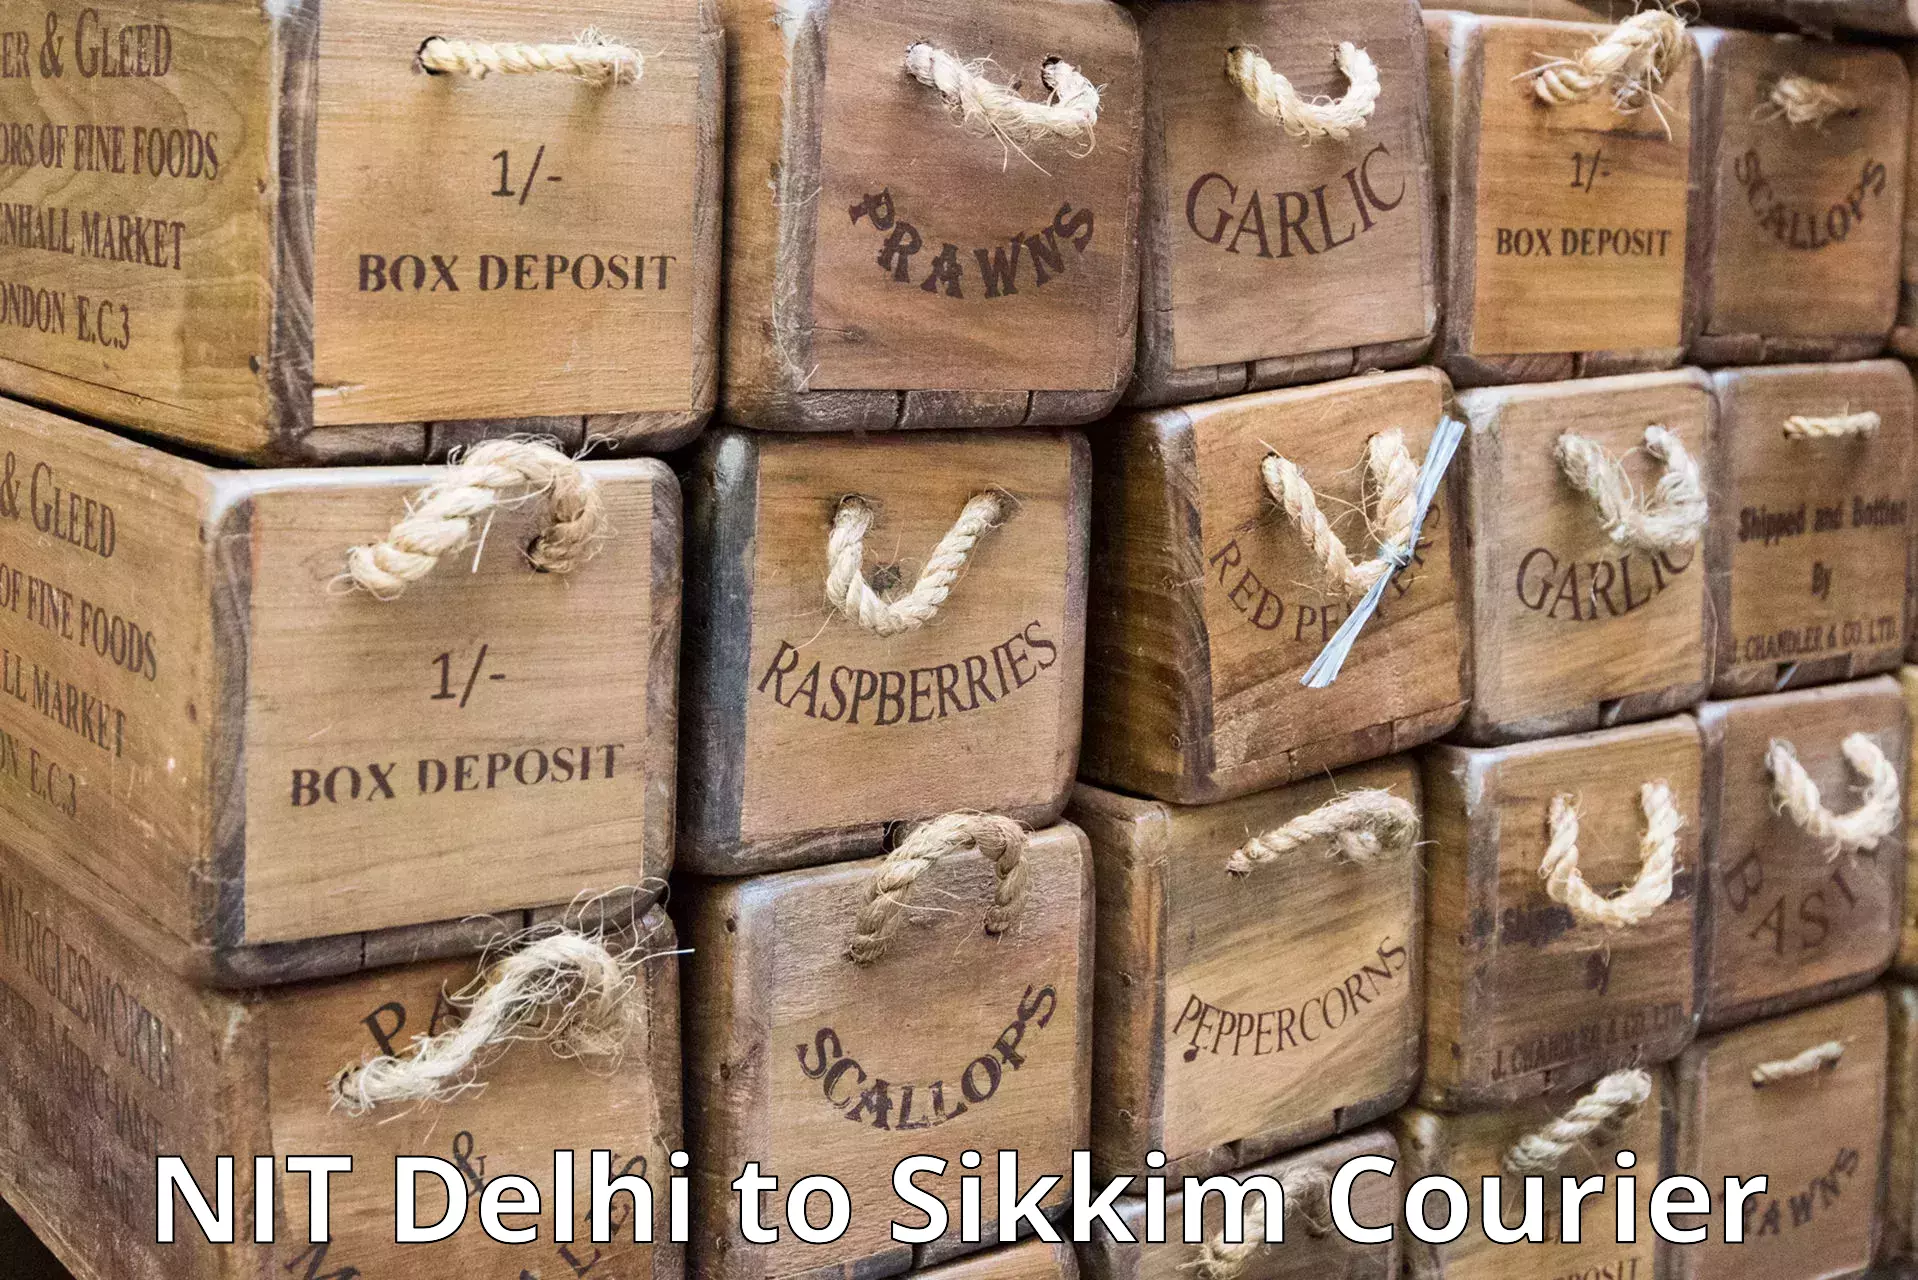 Courier service comparison NIT Delhi to Pelling